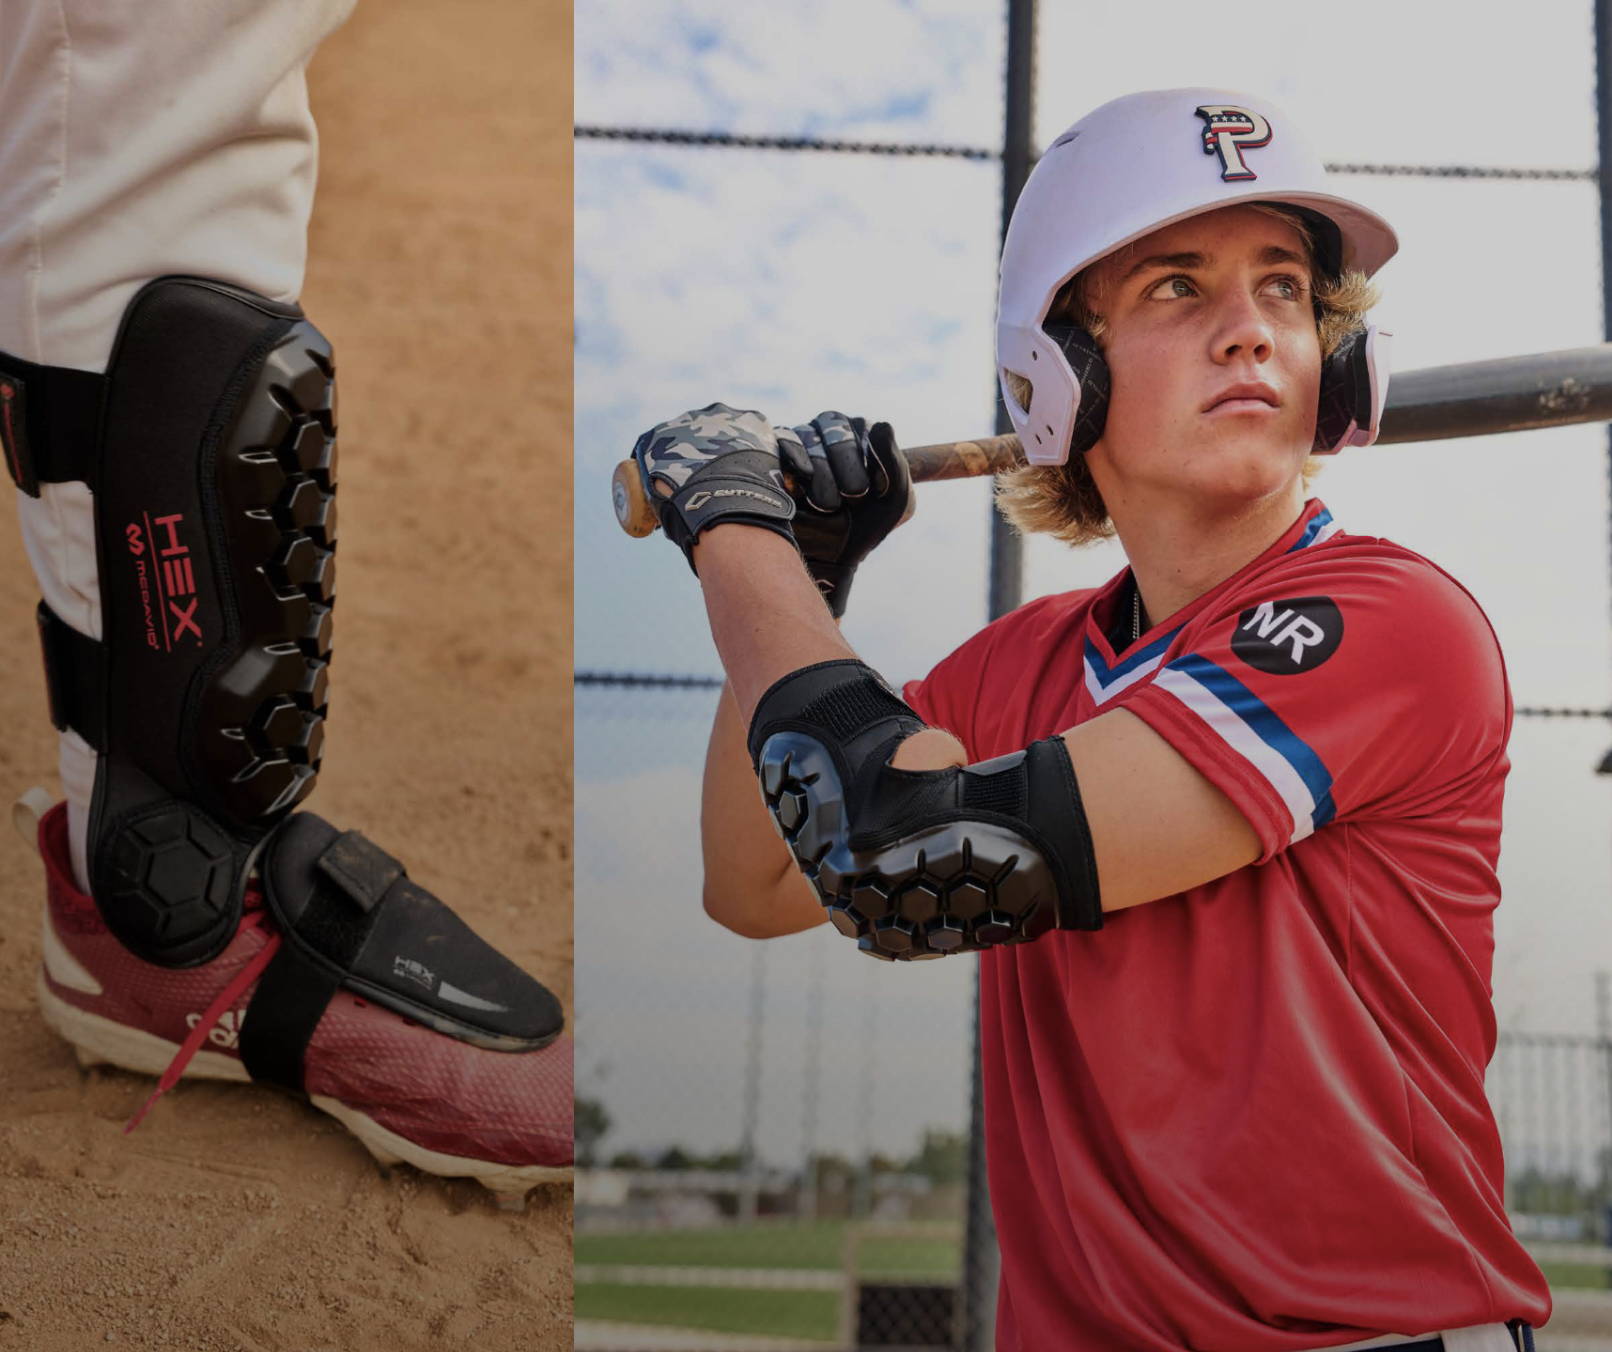 Youth Baseball Player/Athlete Wearing HEX® High Impact Baseball Gear For Leg & Elbow